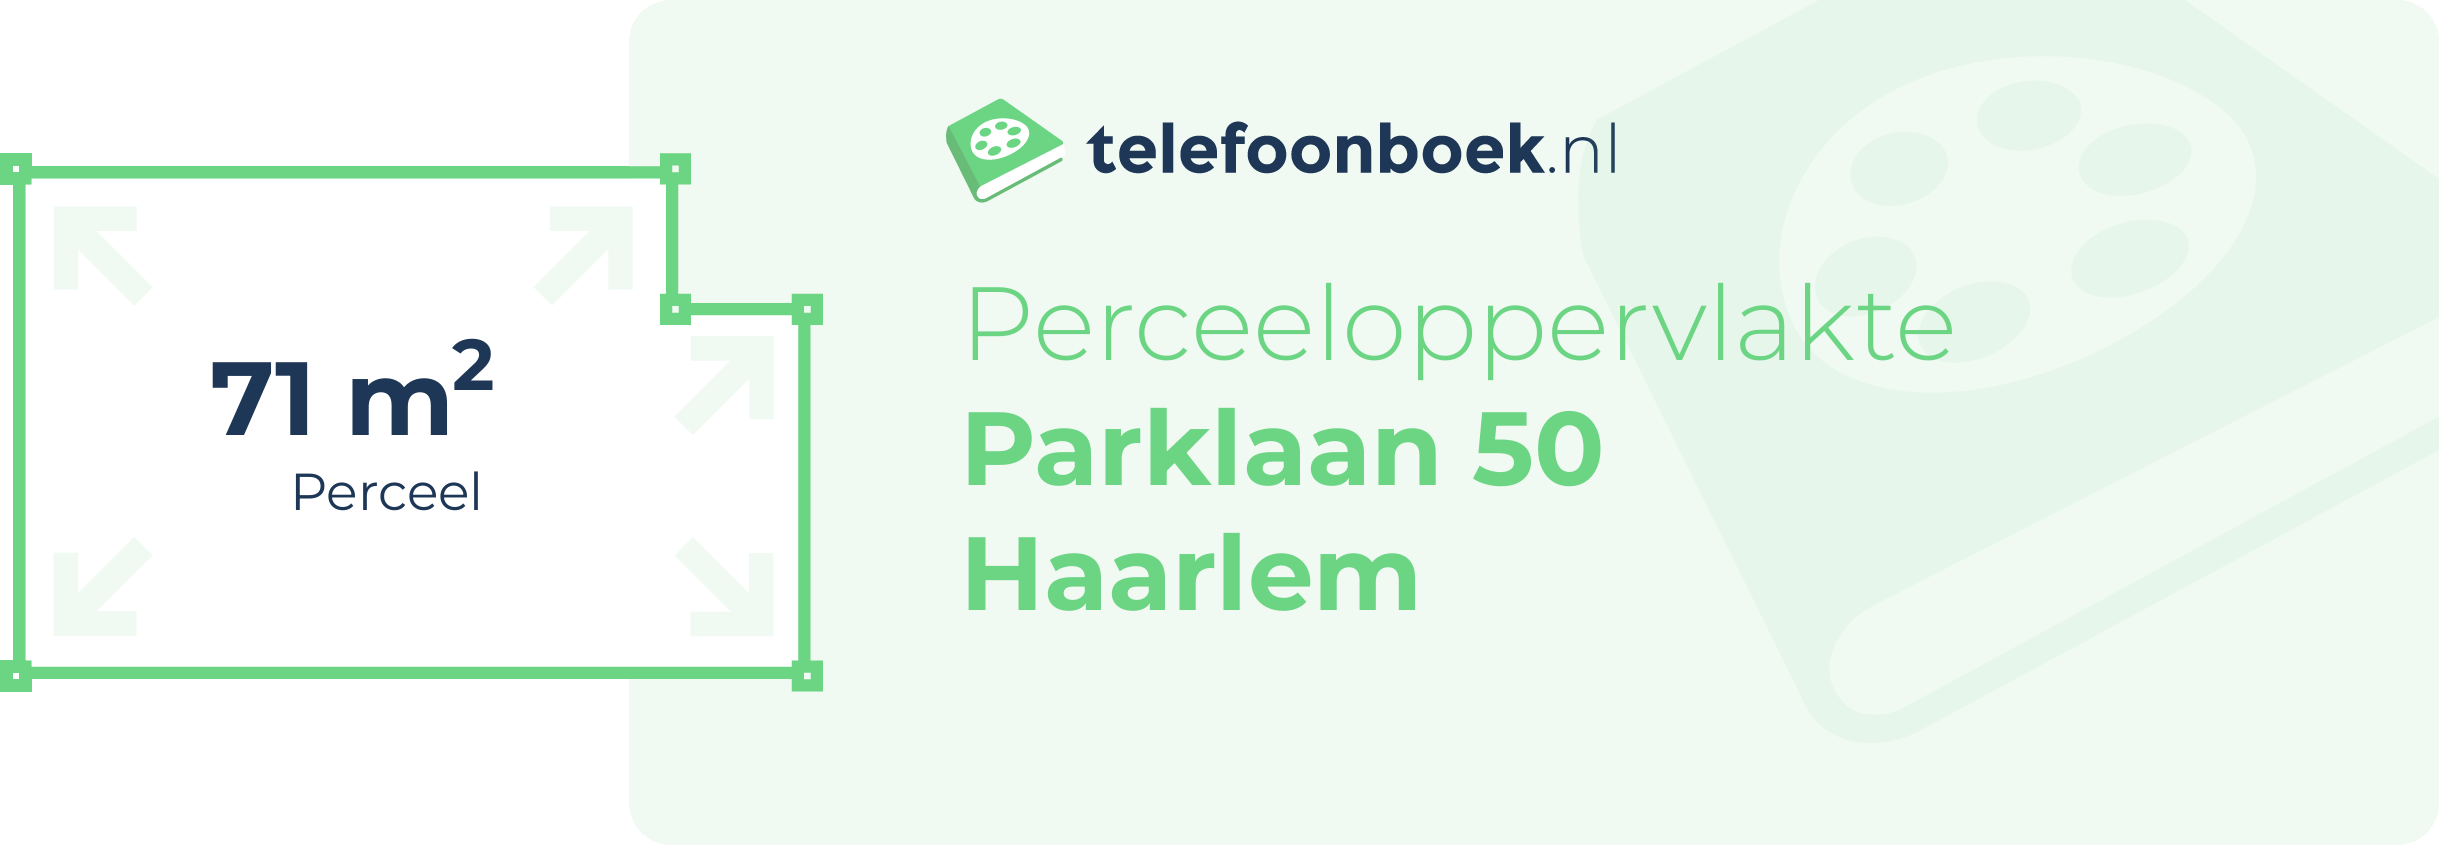 Perceeloppervlakte Parklaan 50 Haarlem